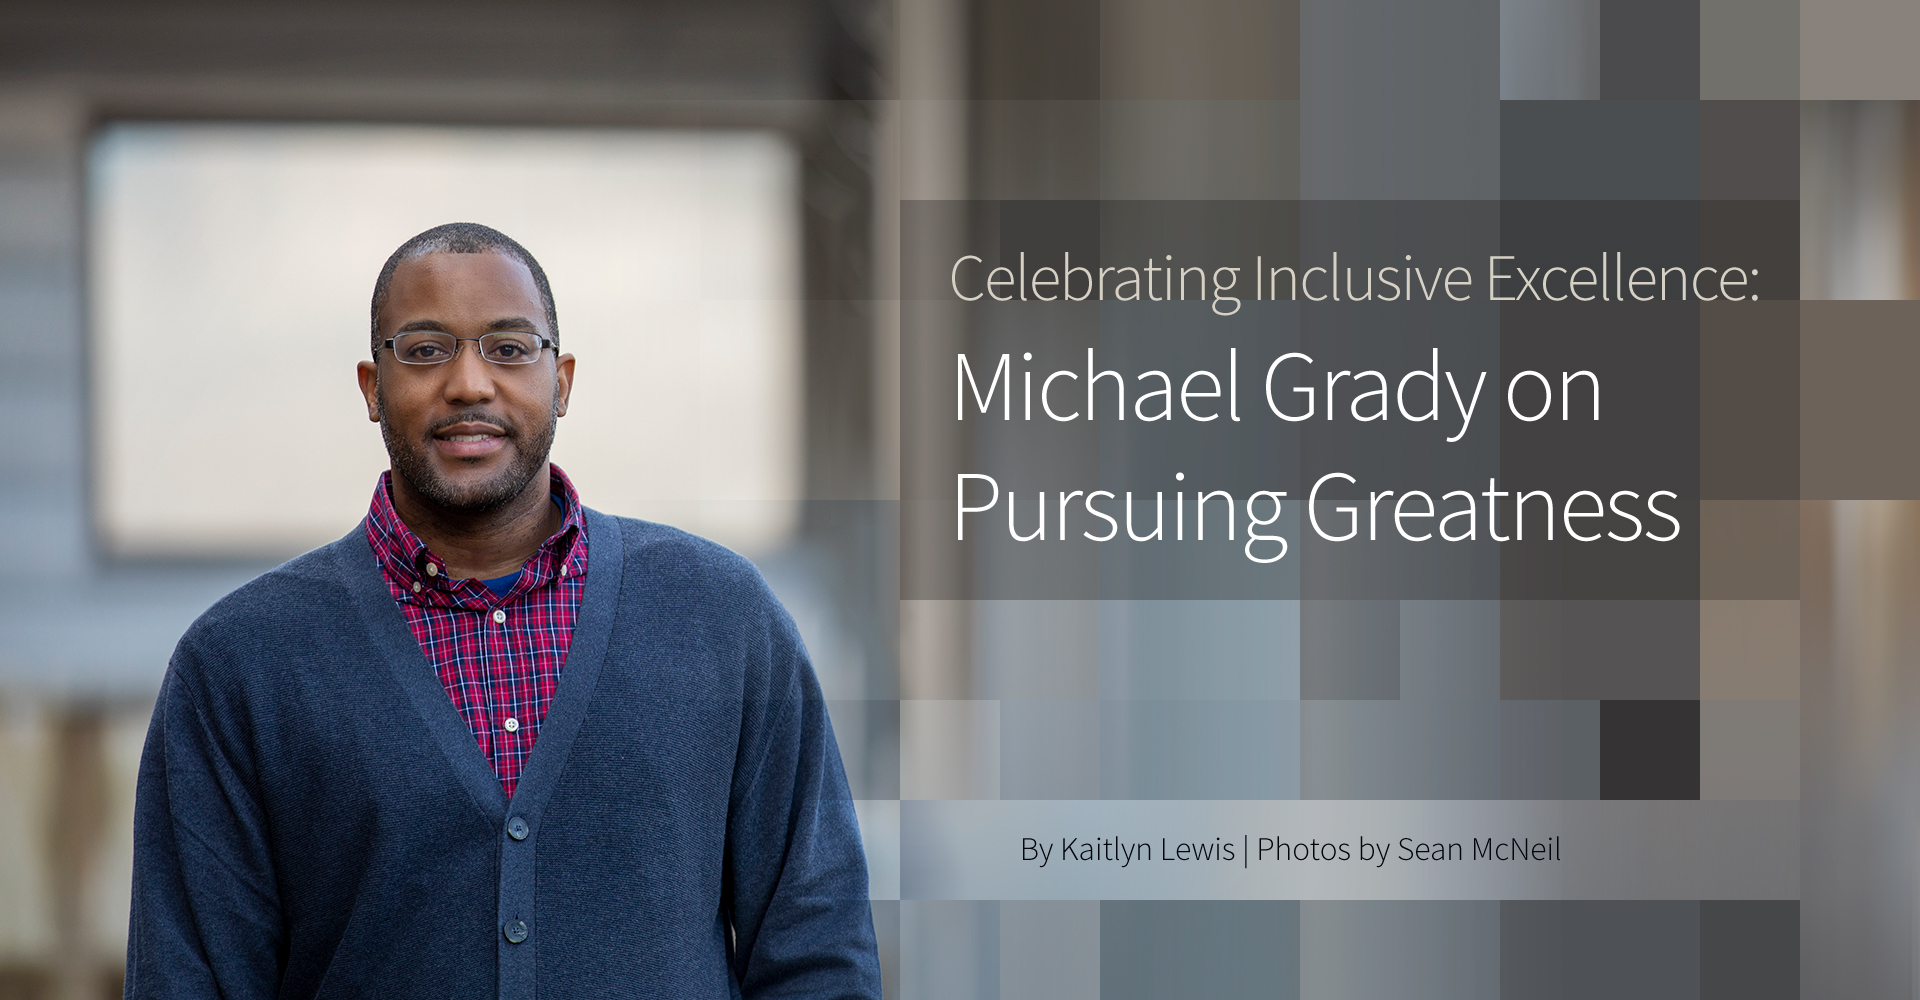 Michael Grady on Pursuing Greatness